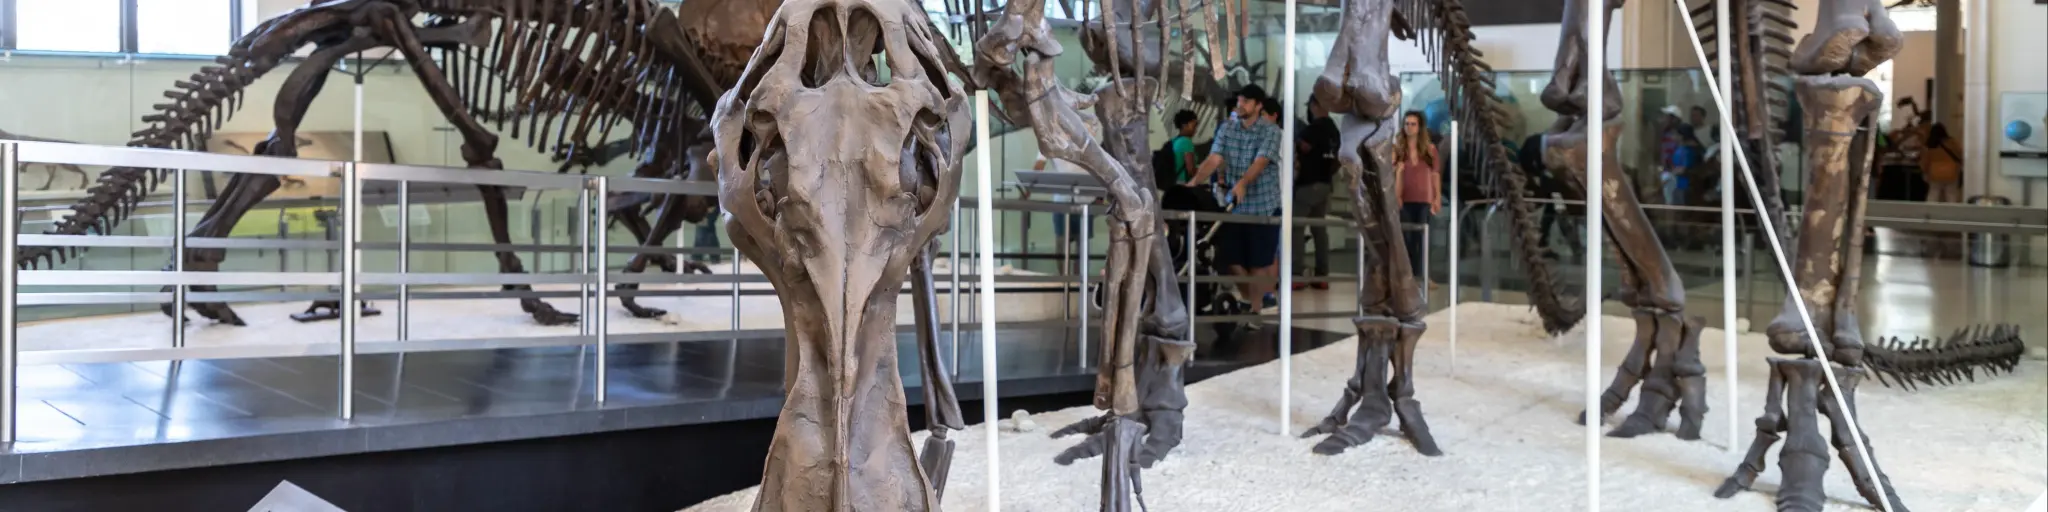 Dinosaur skeleton in American Museum of Natural History in New York City